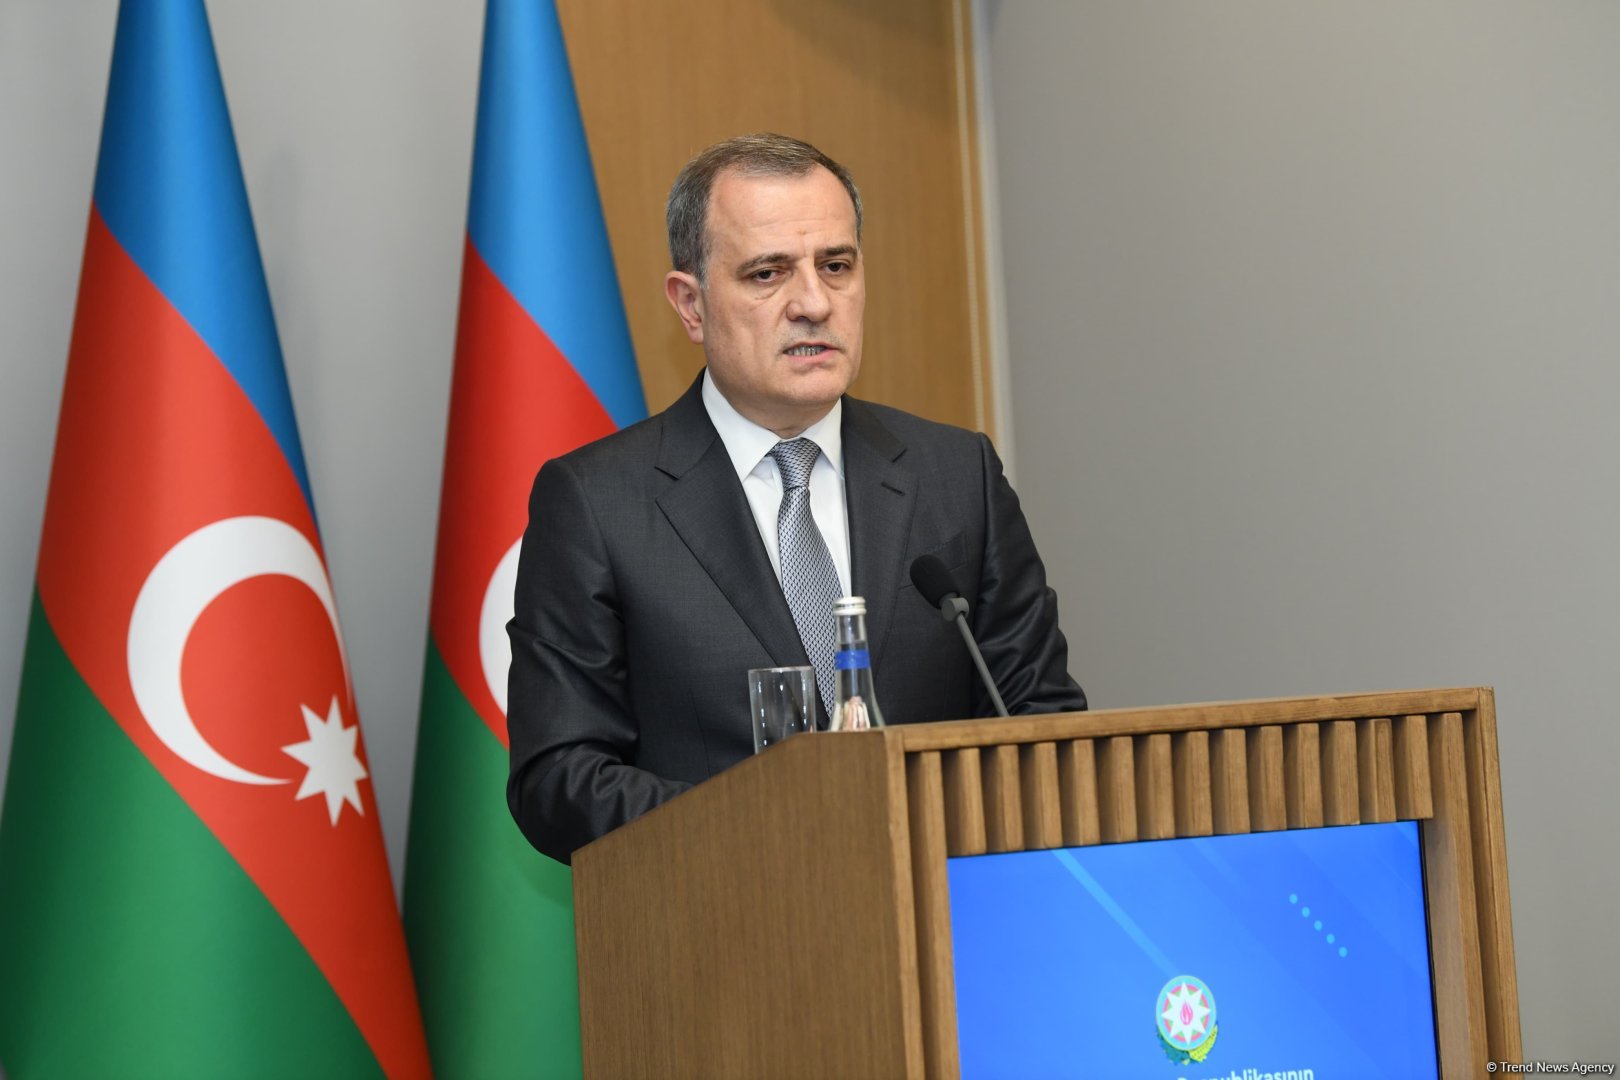 Armenia's Constitution contains territorial claims to neighboring states - Azerbaijani FM